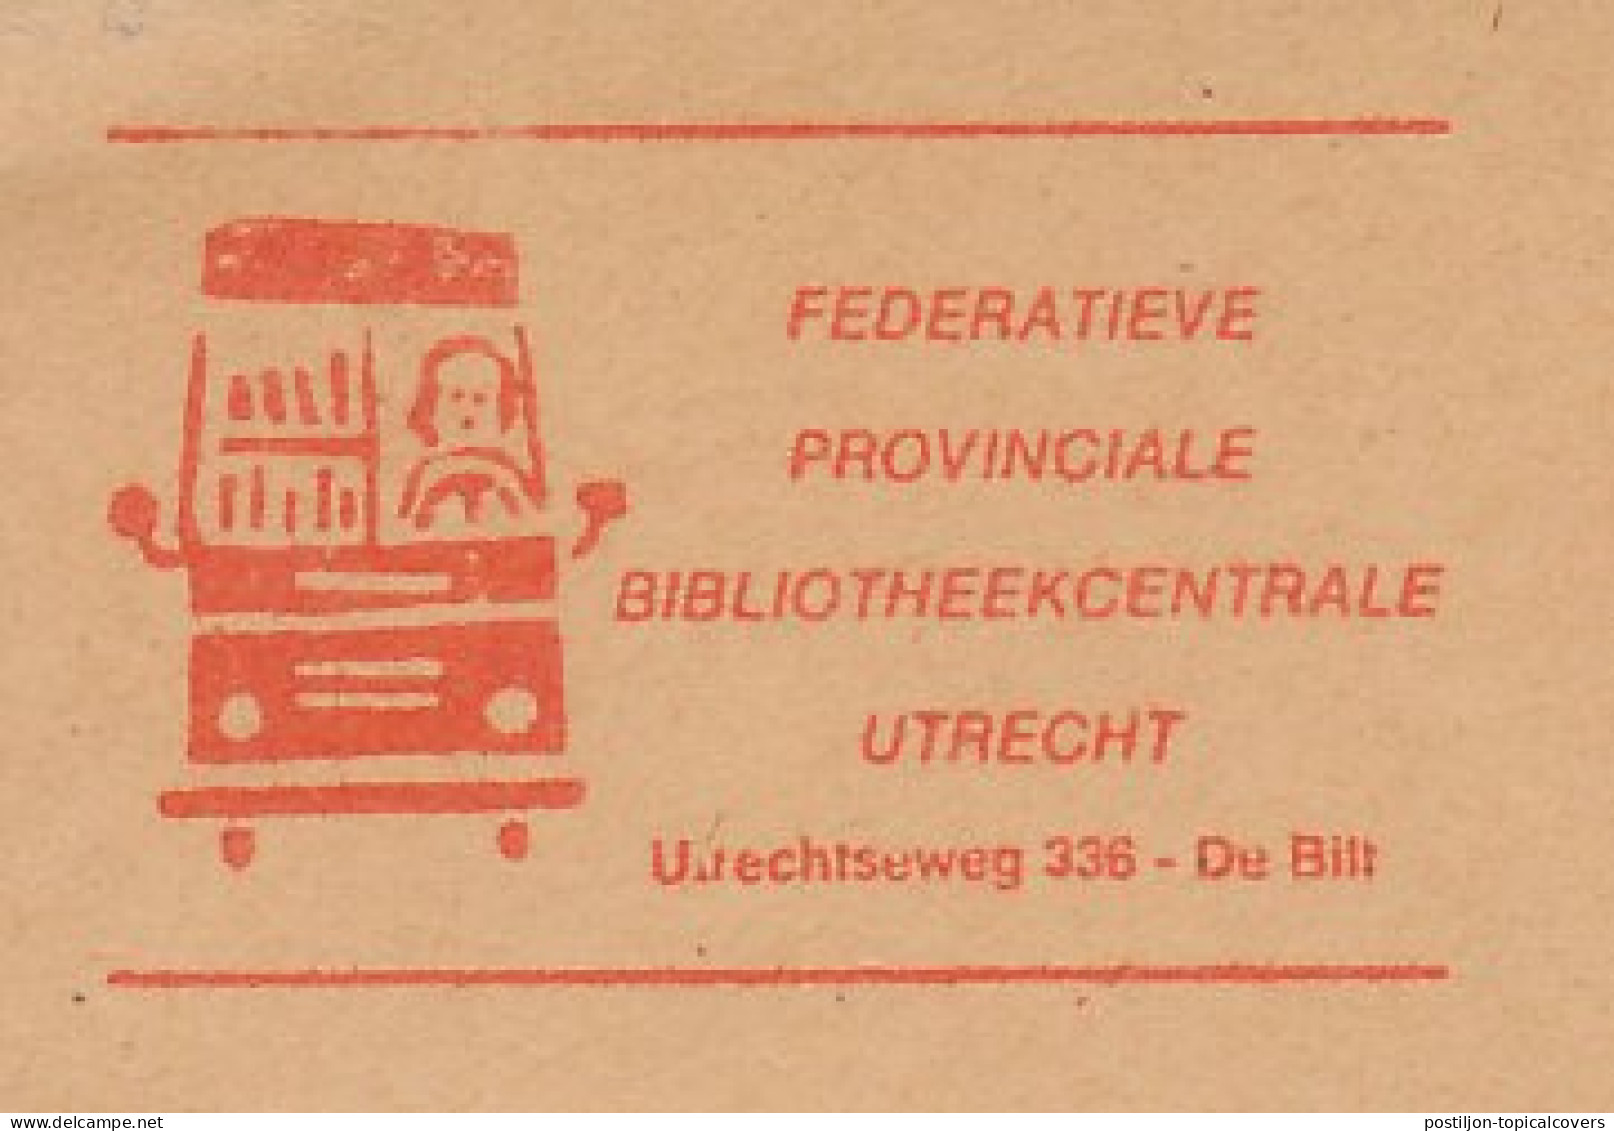 Meter Cut Netherlands 1974 ( De Bilt ) Library Bus - Book Bus - Unclassified